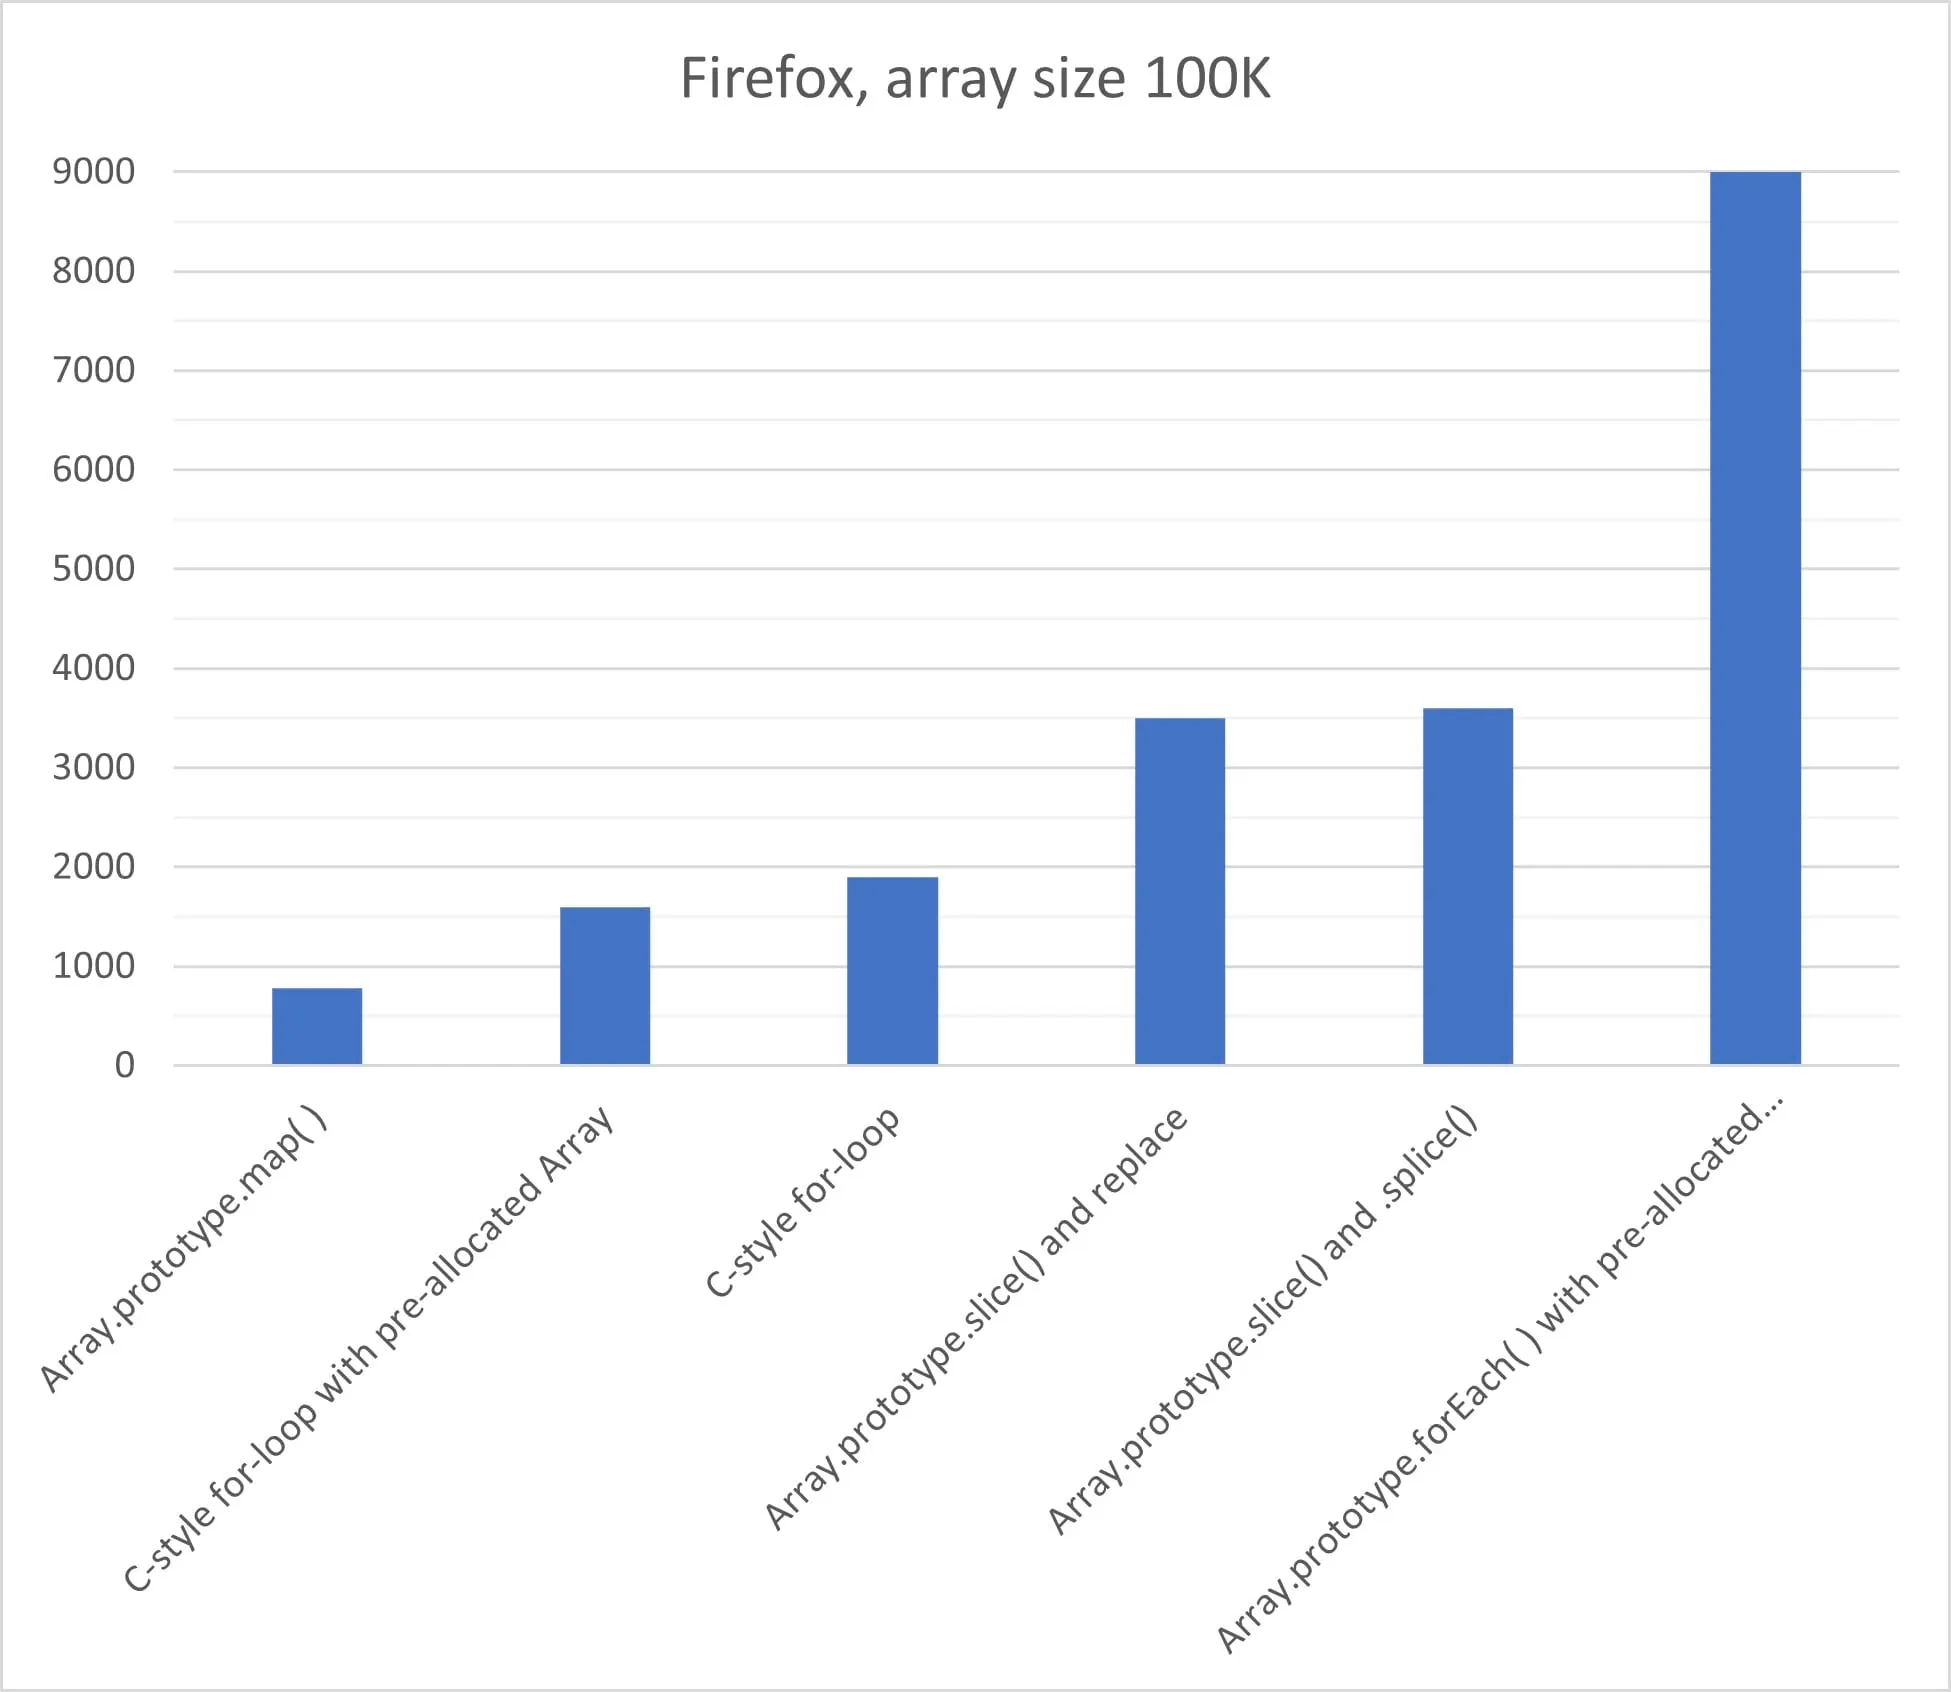 Firefox benchmark at array size 100K